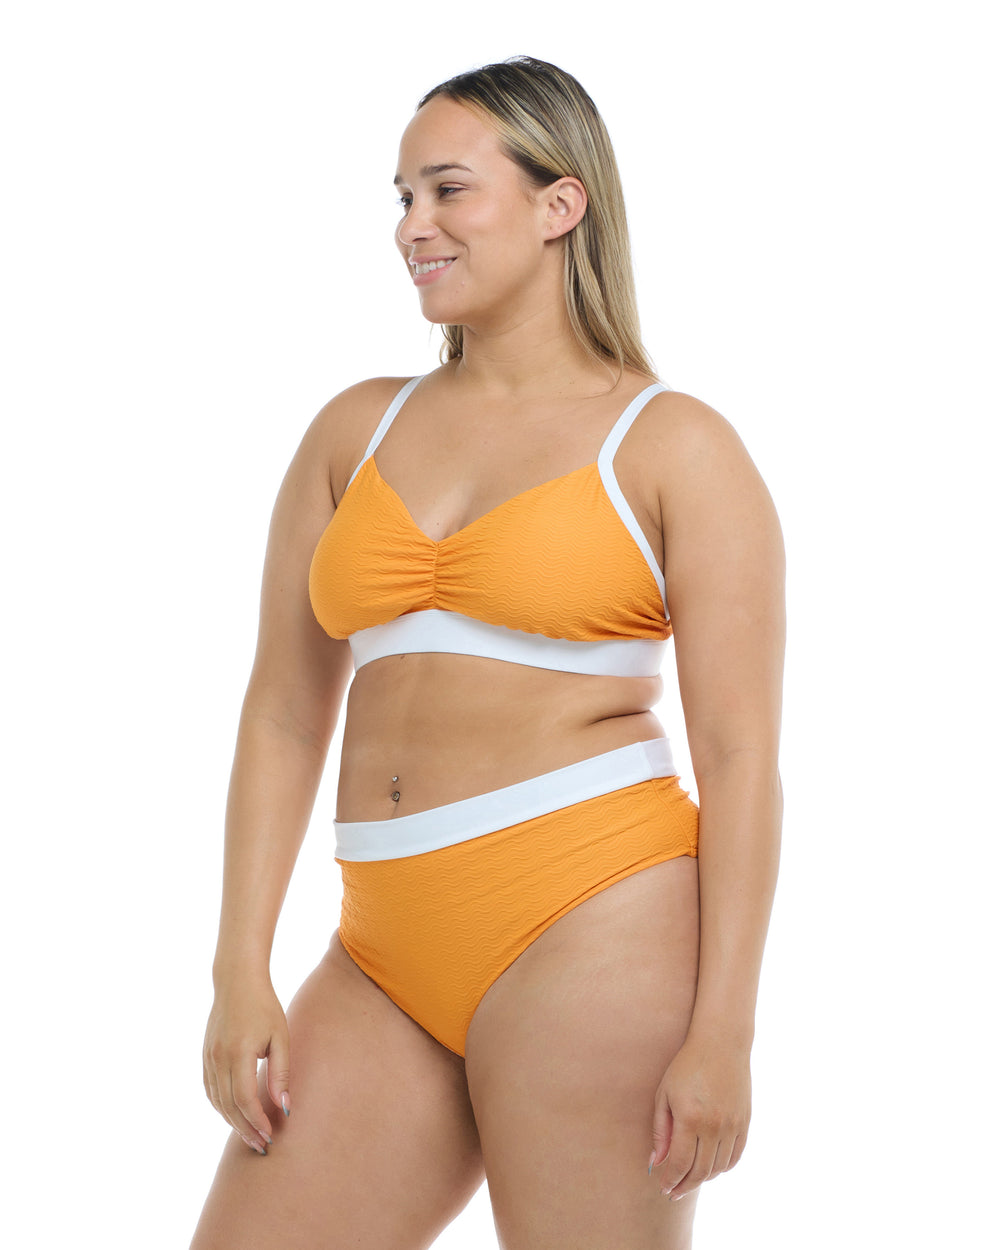 BODYGLOVE Inflorescence Drew Women's Bikini Top - Plus Size